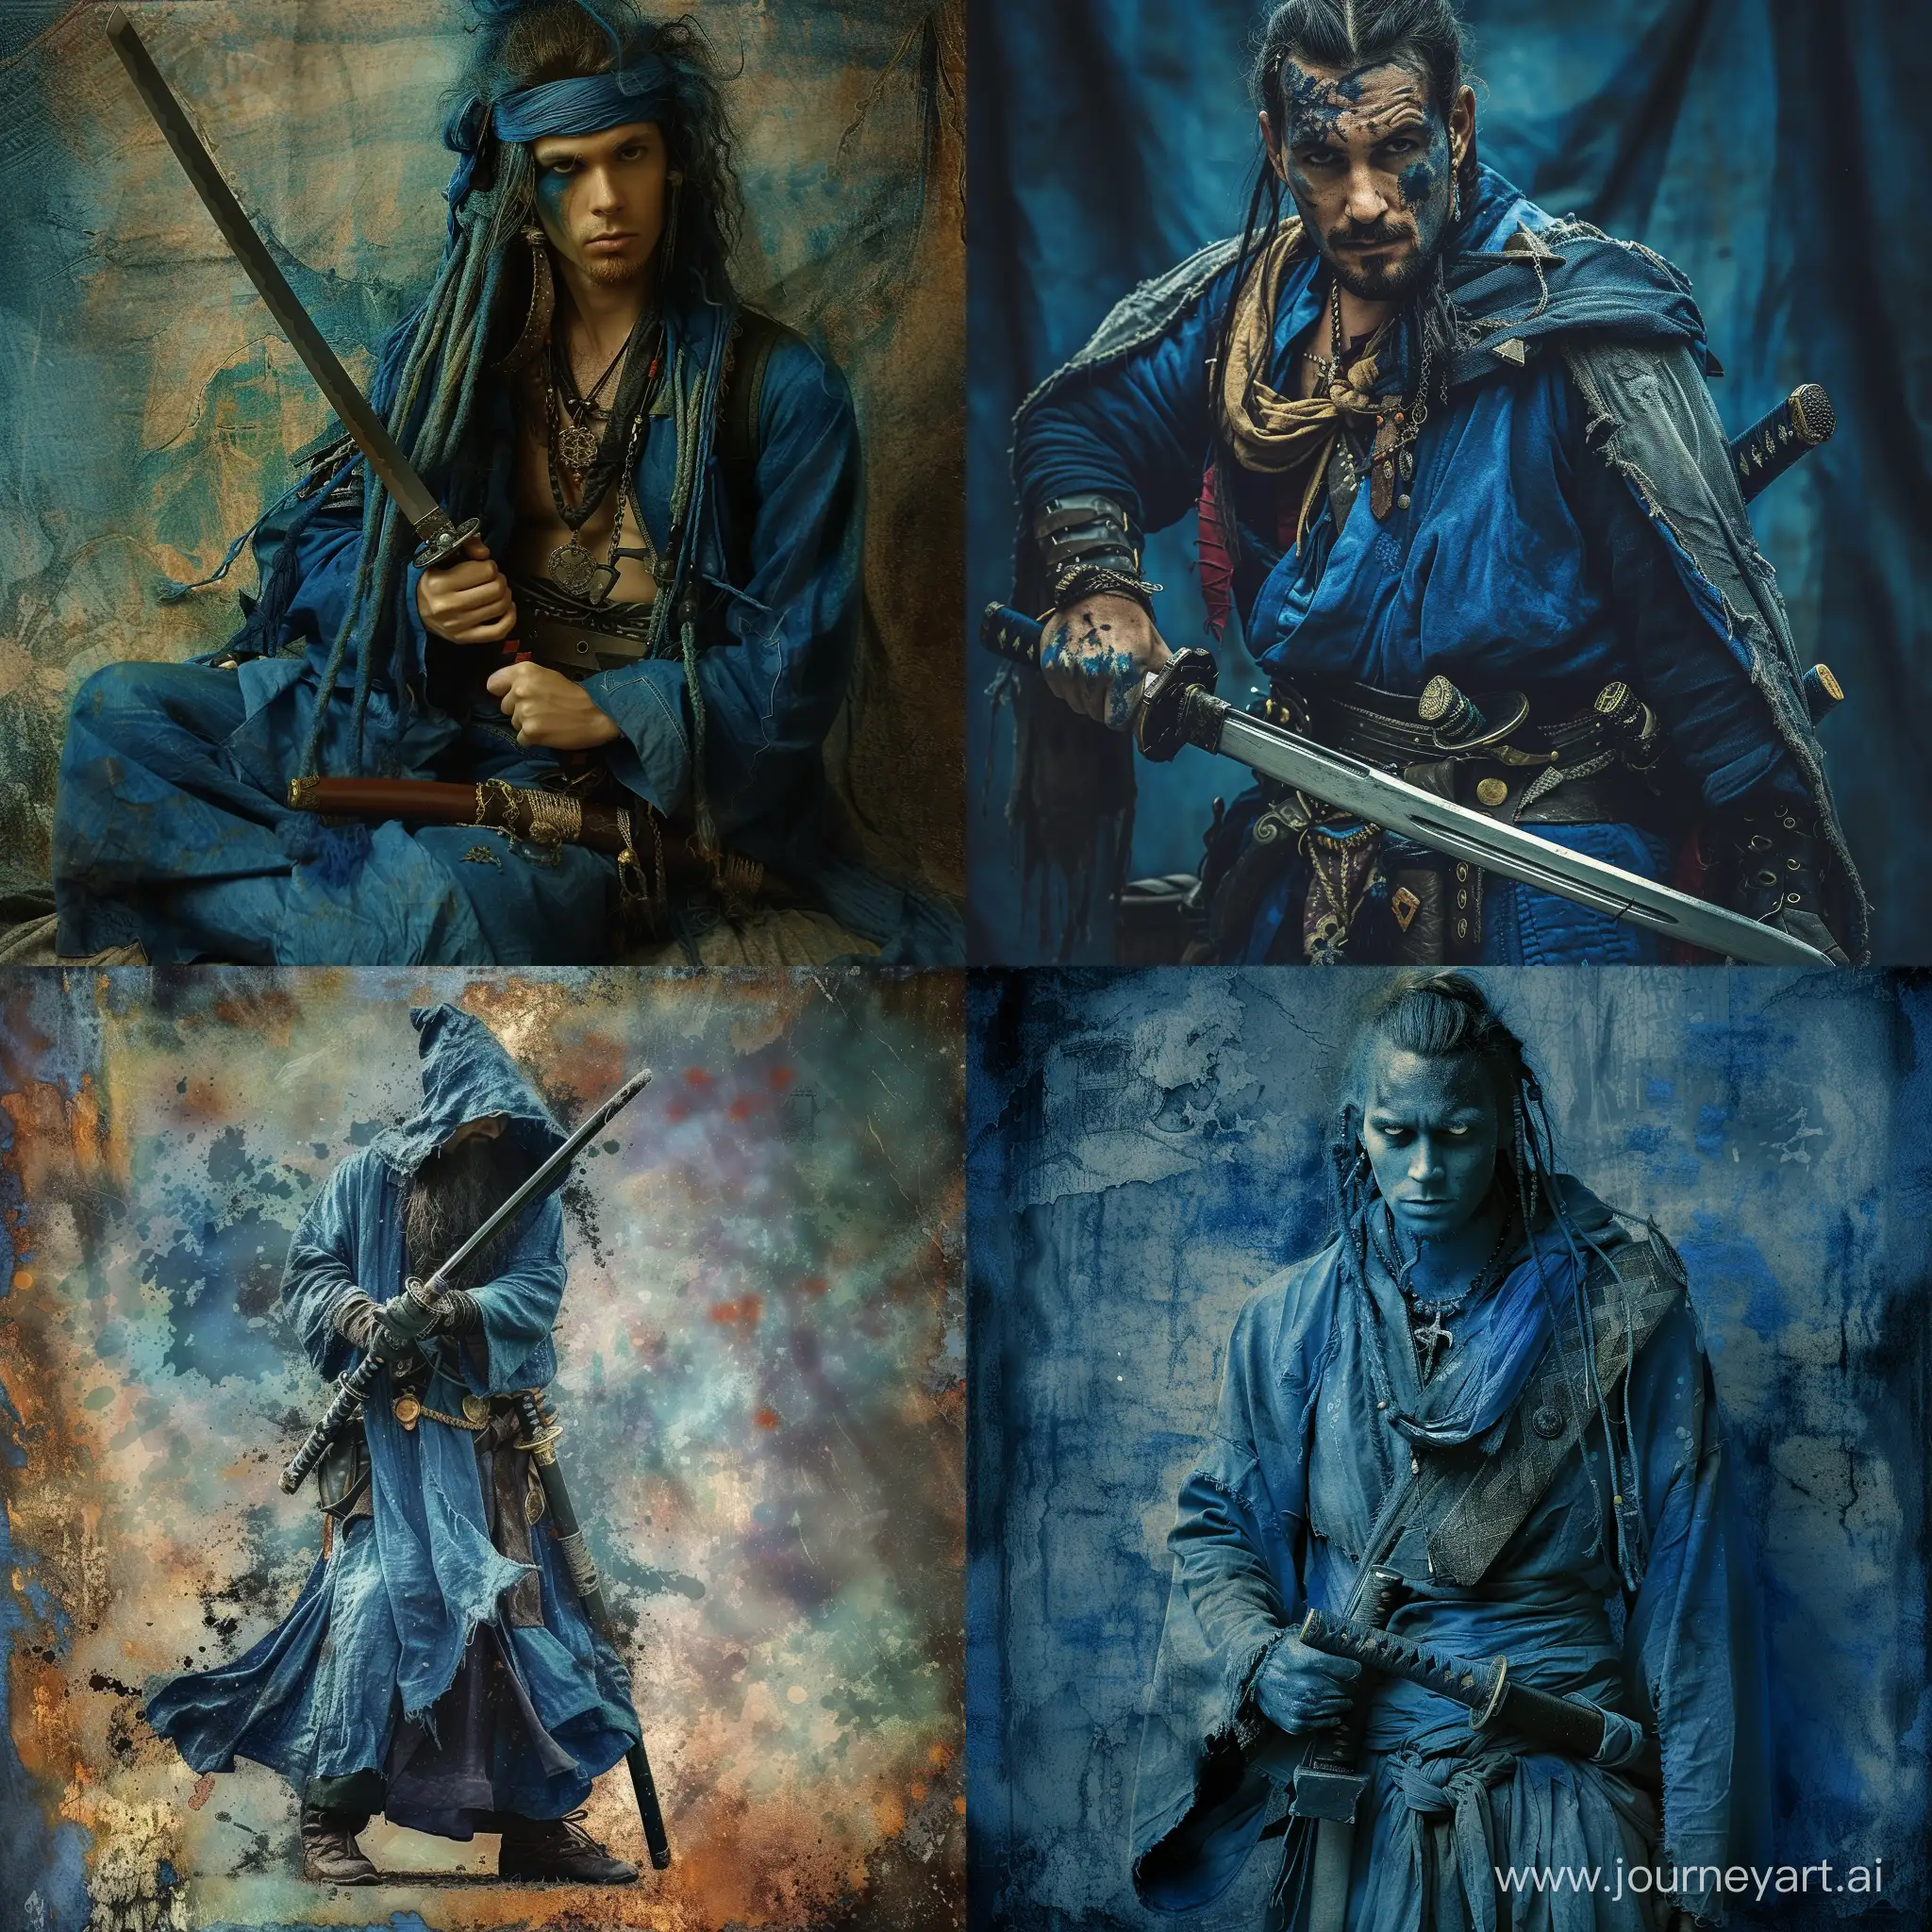 Medieval-Bard-with-Katana-in-Blue-Grunge-Attire